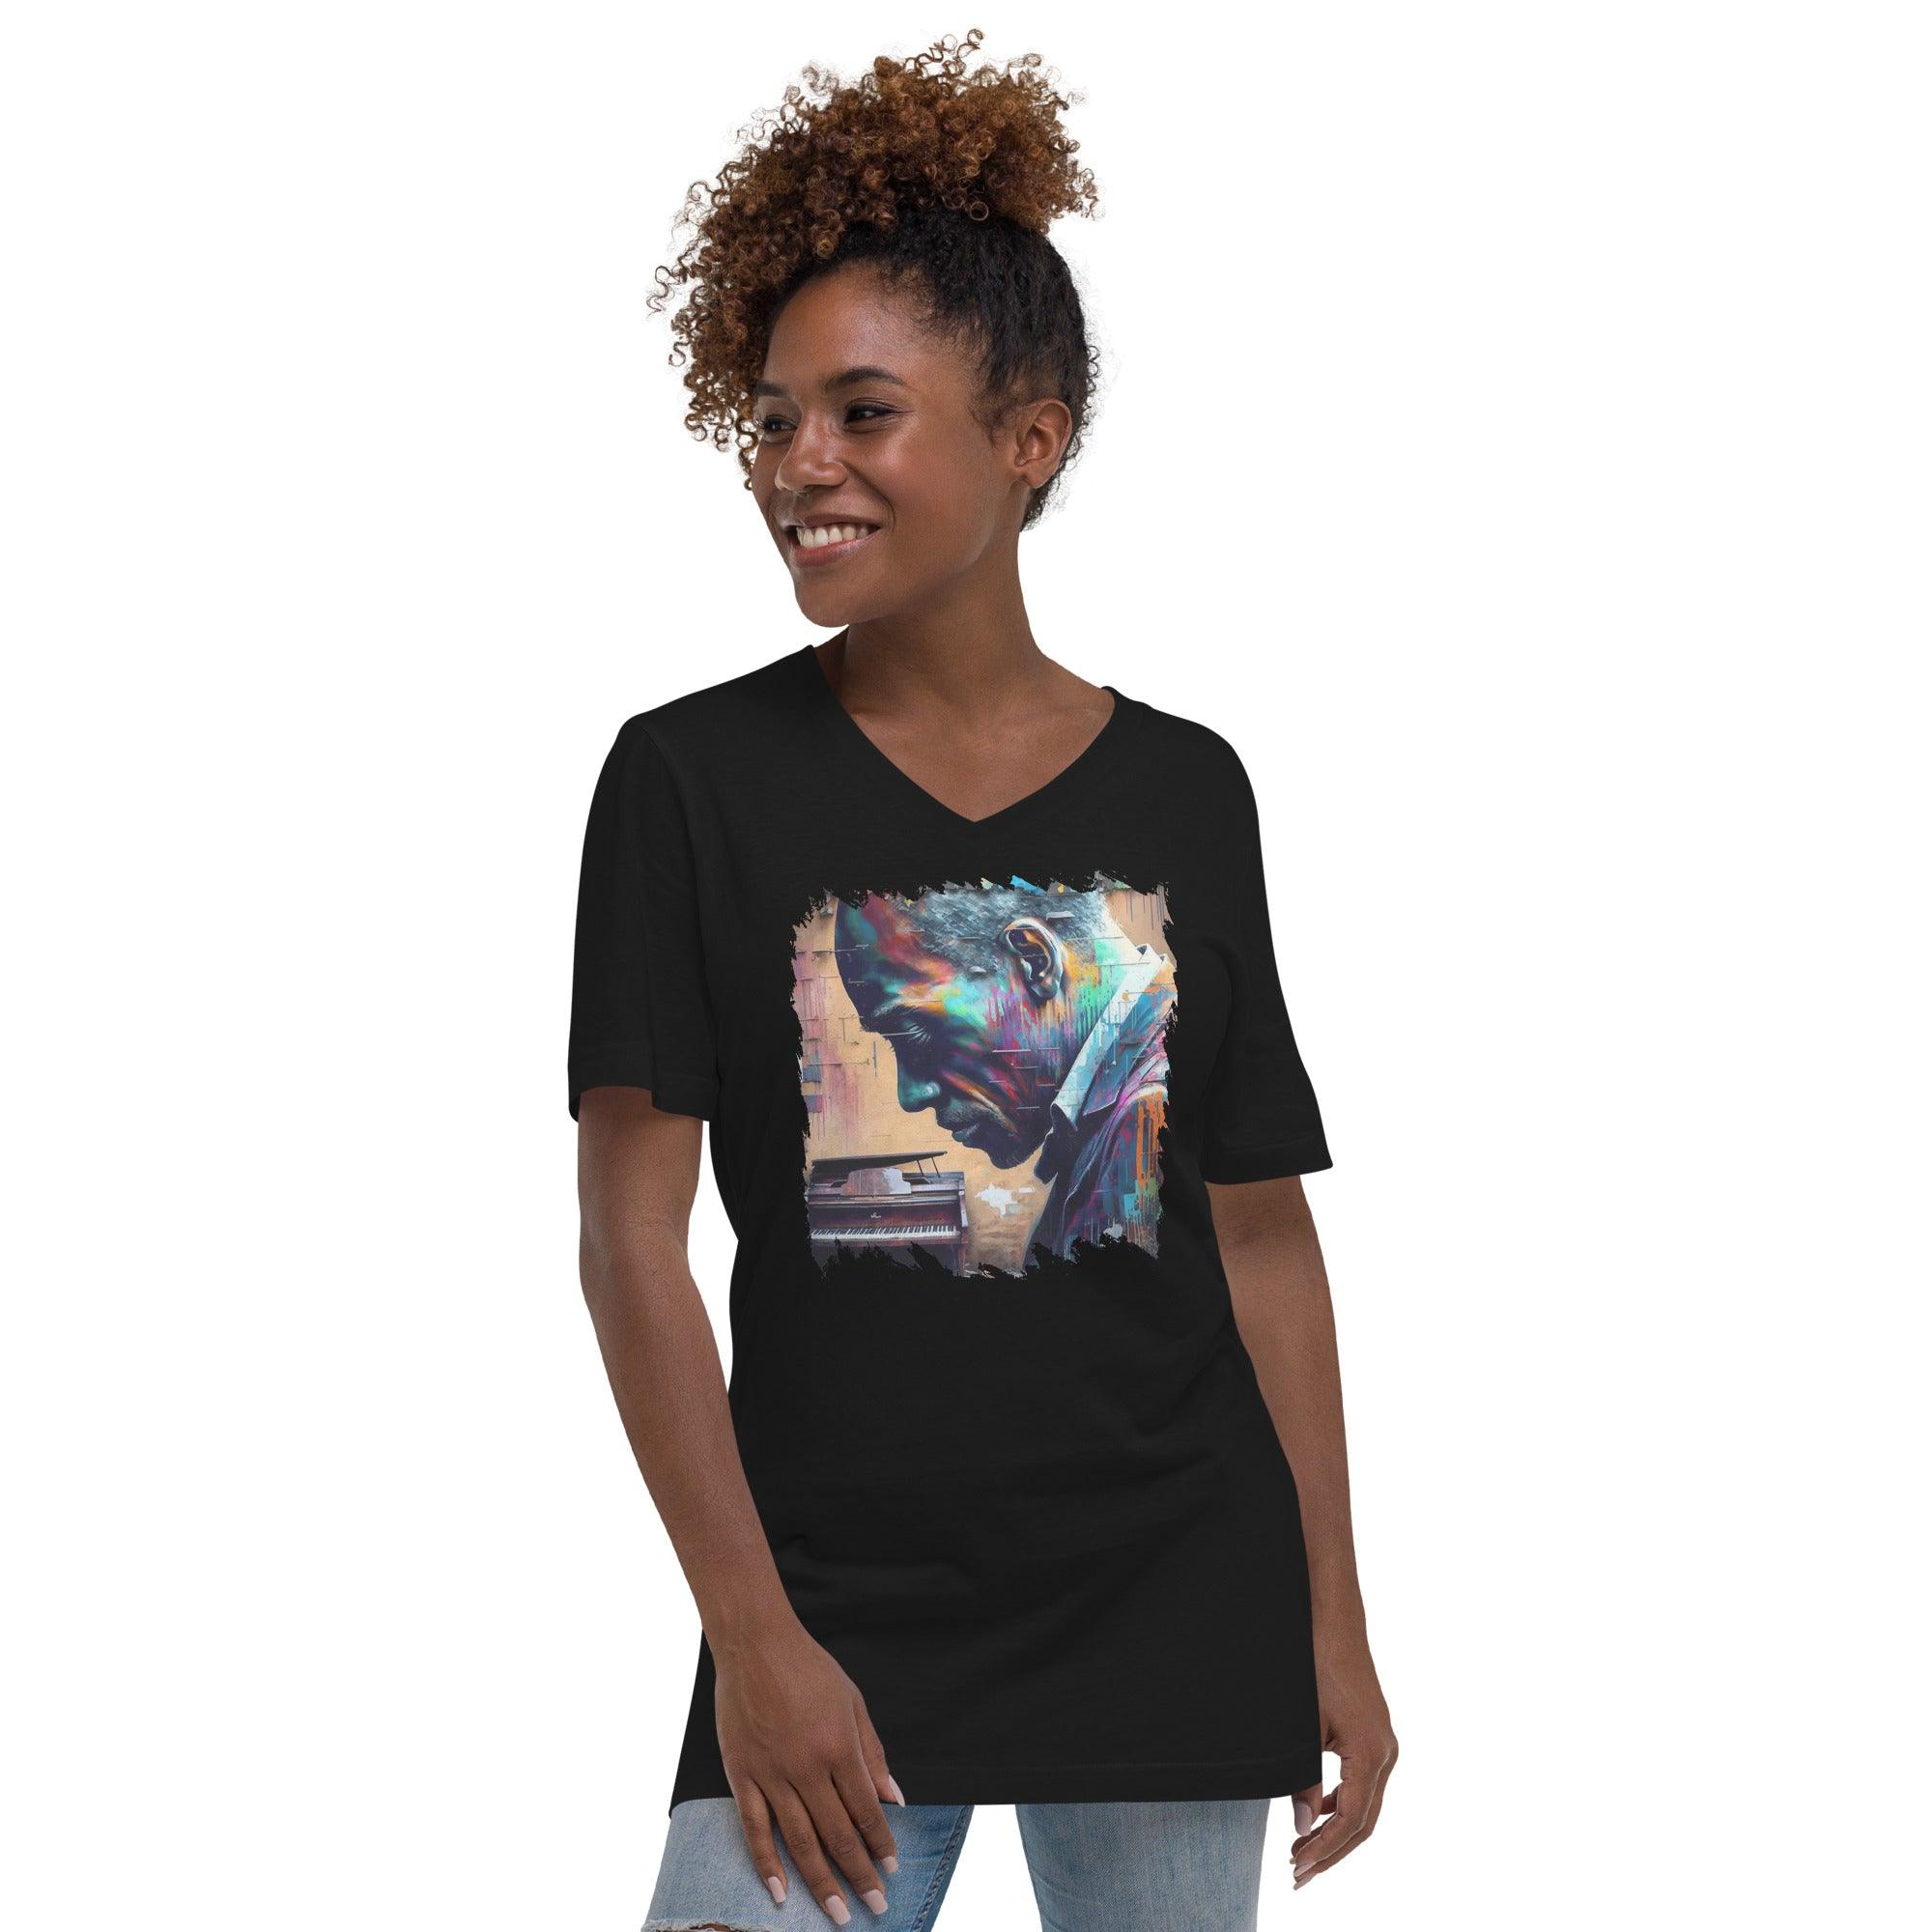 Groovin' On The Keys Unisex Short Sleeve V-Neck T-Shirt - Beyond T-shirts